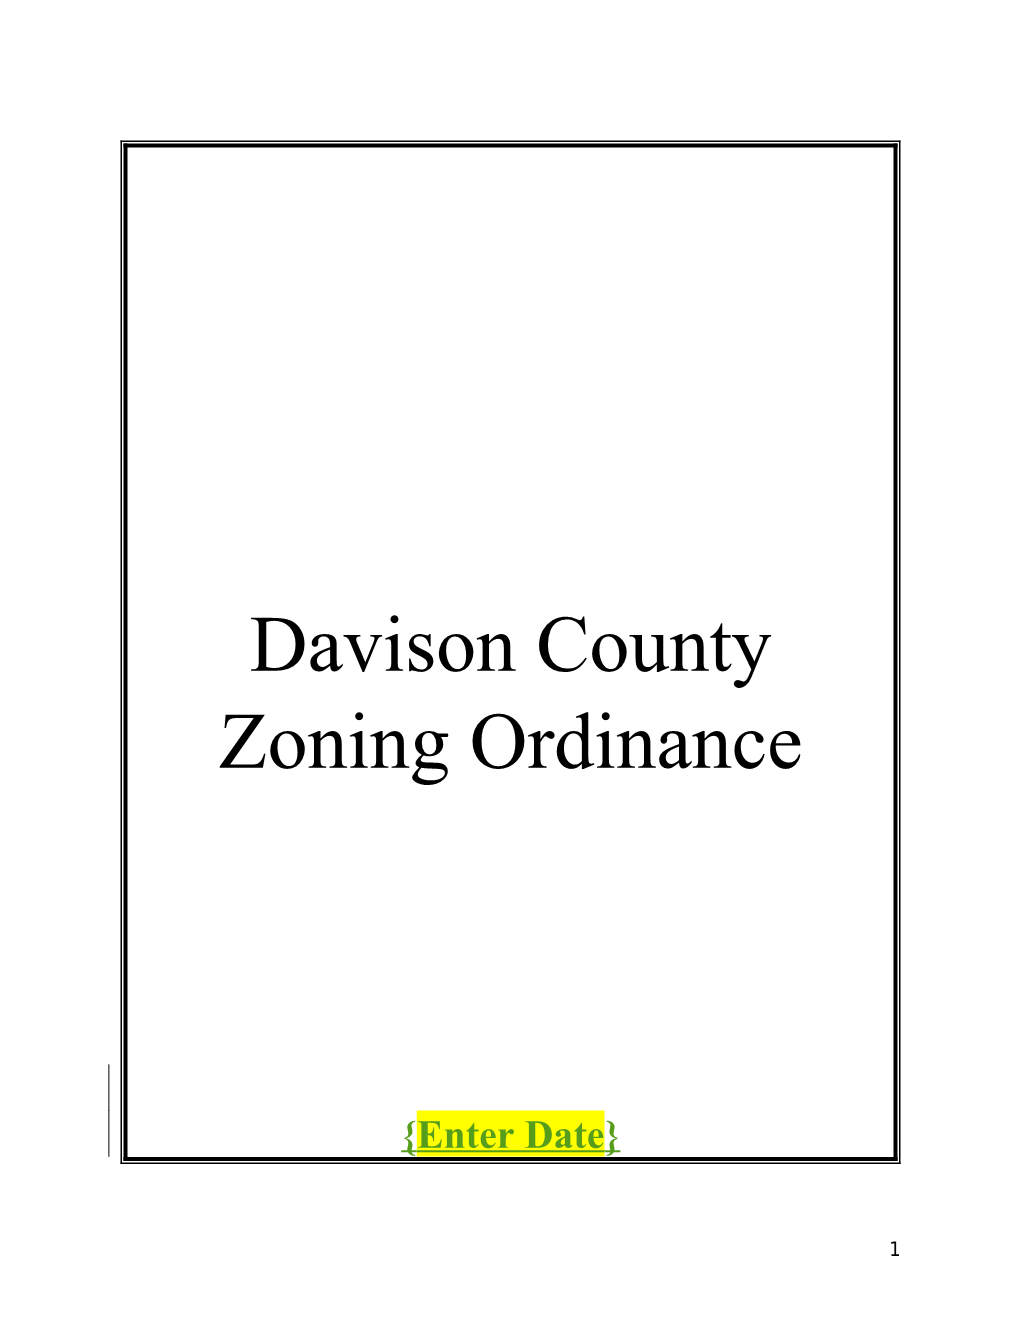 Davison County Planning & Zoning